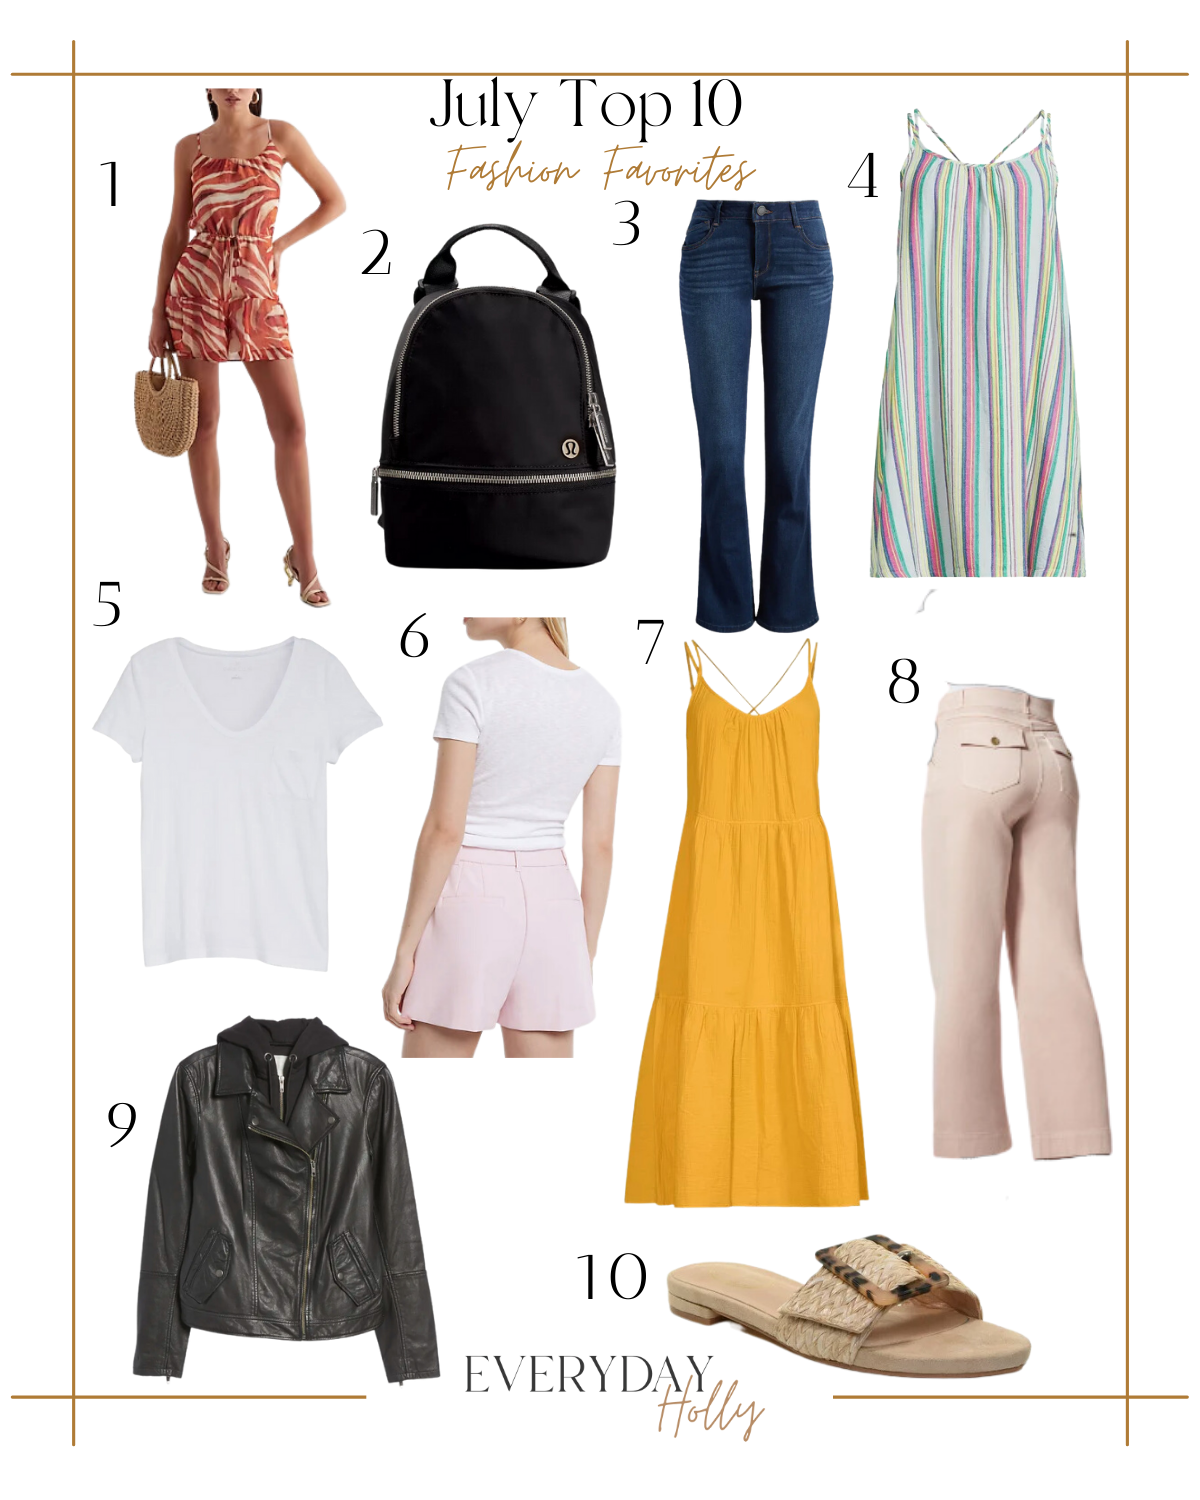 July Top 10 Fashion Favorites | #romper #sandals #jeans #shorts #linen #Nordstrom #Walmart #Express #Spanx #Lululemon